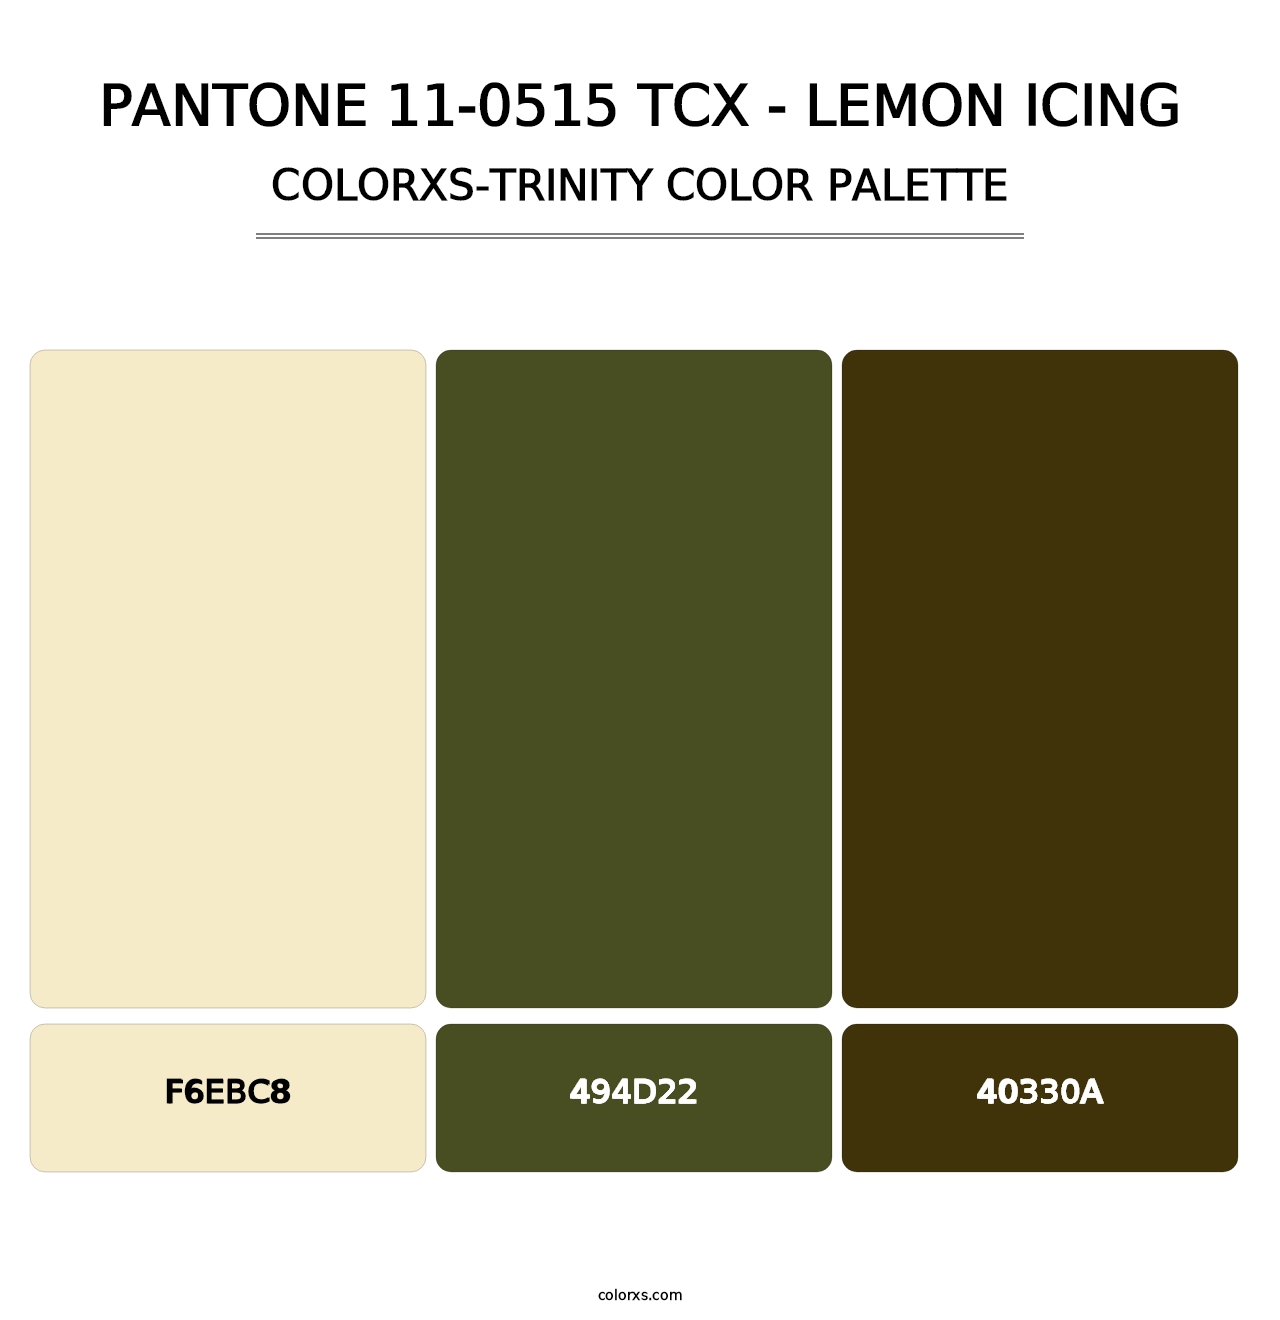 PANTONE 11-0515 TCX - Lemon Icing - Colorxs Trinity Palette